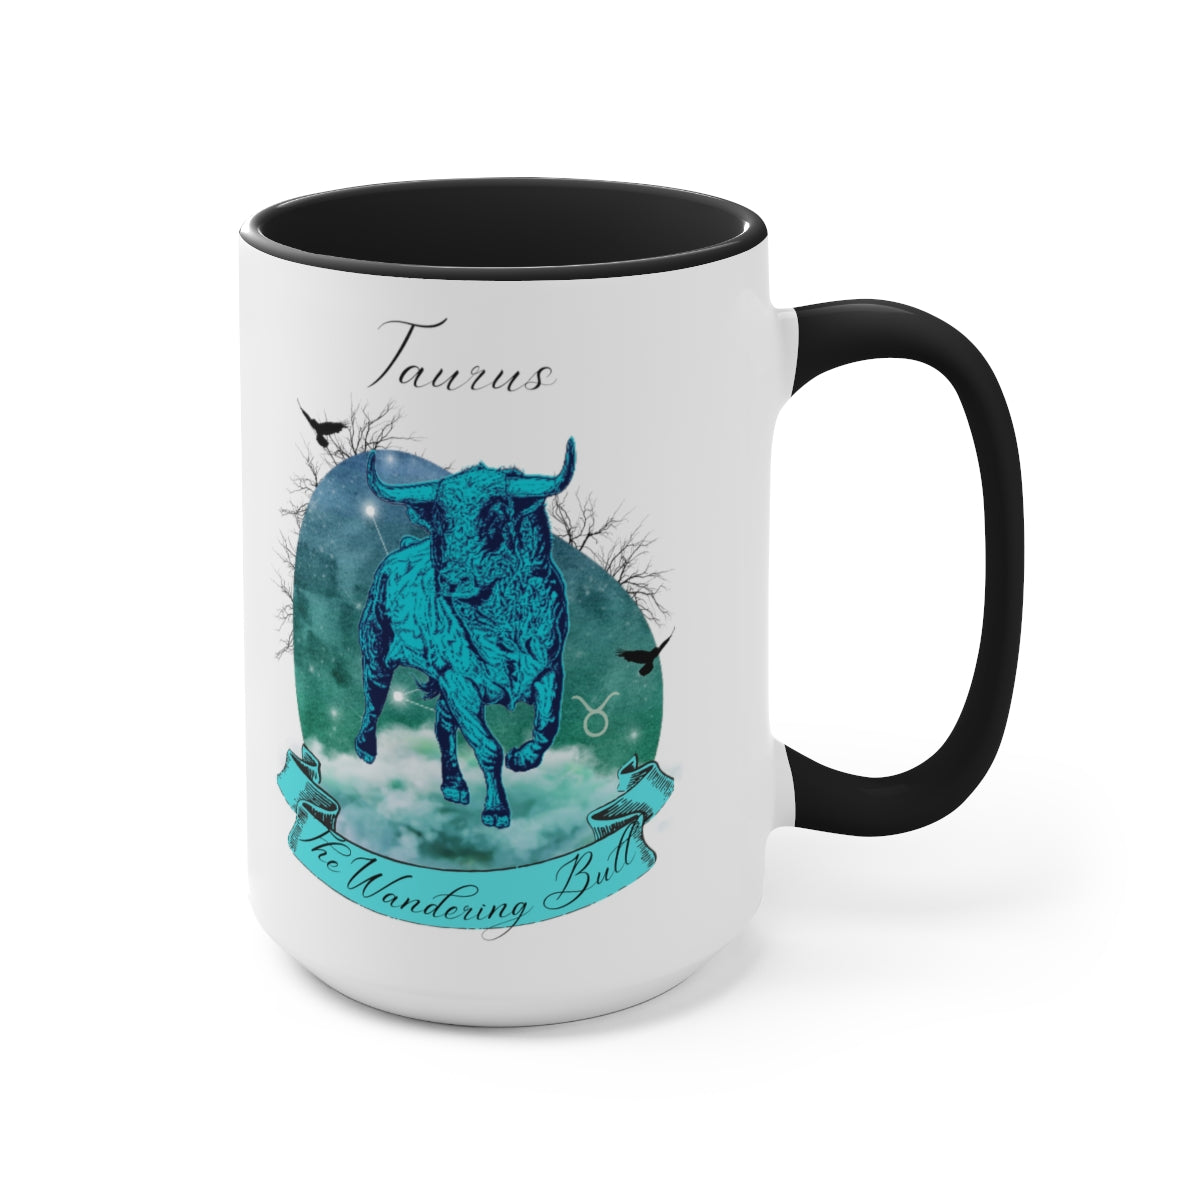 Taurus Zodiac The Wandering Bull Two-Tone Coffee Mugs, 15oz